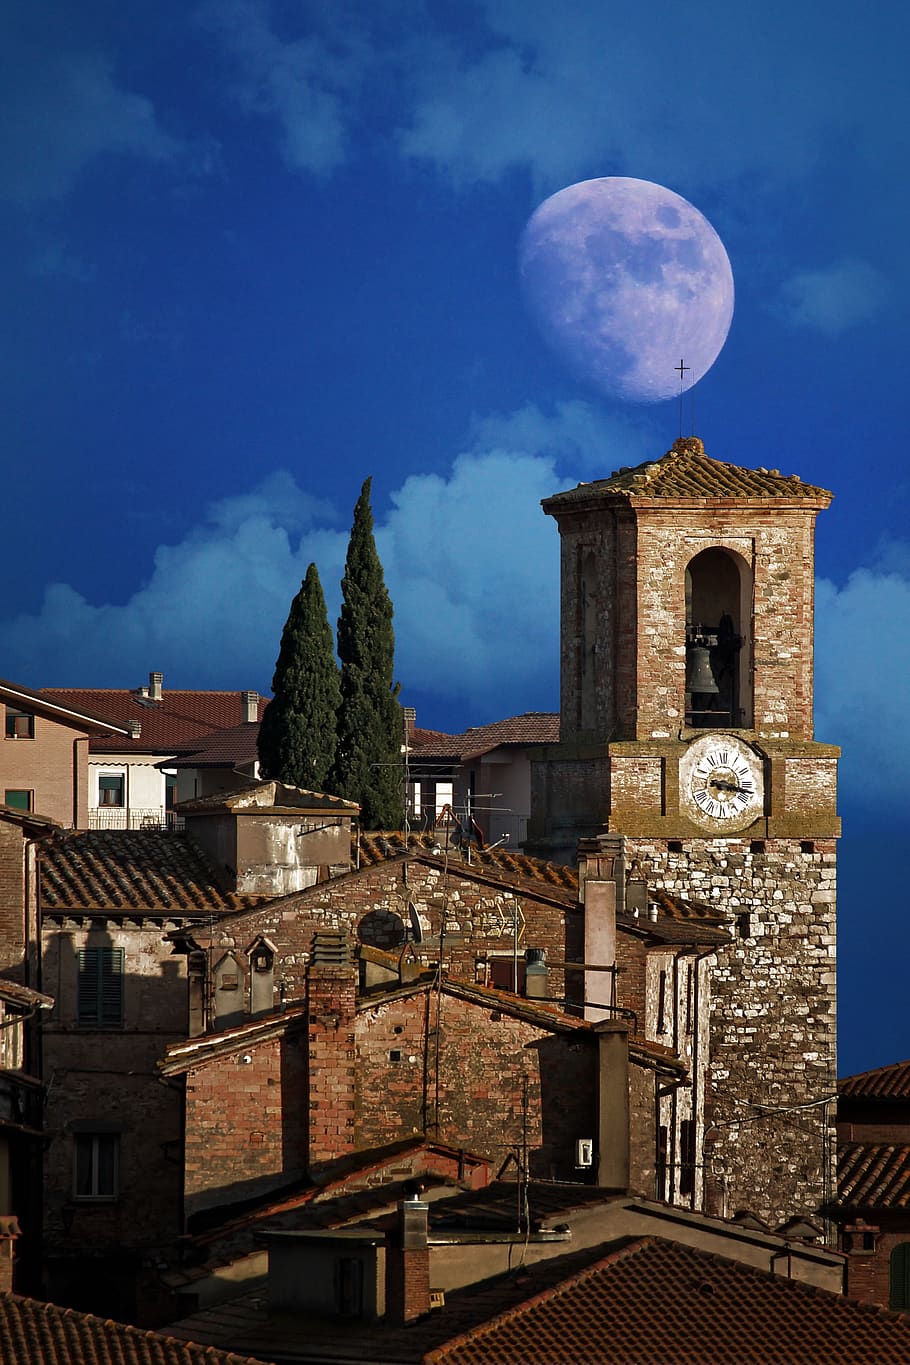 luna, country, umbria, italy, sky, campanile, architecture